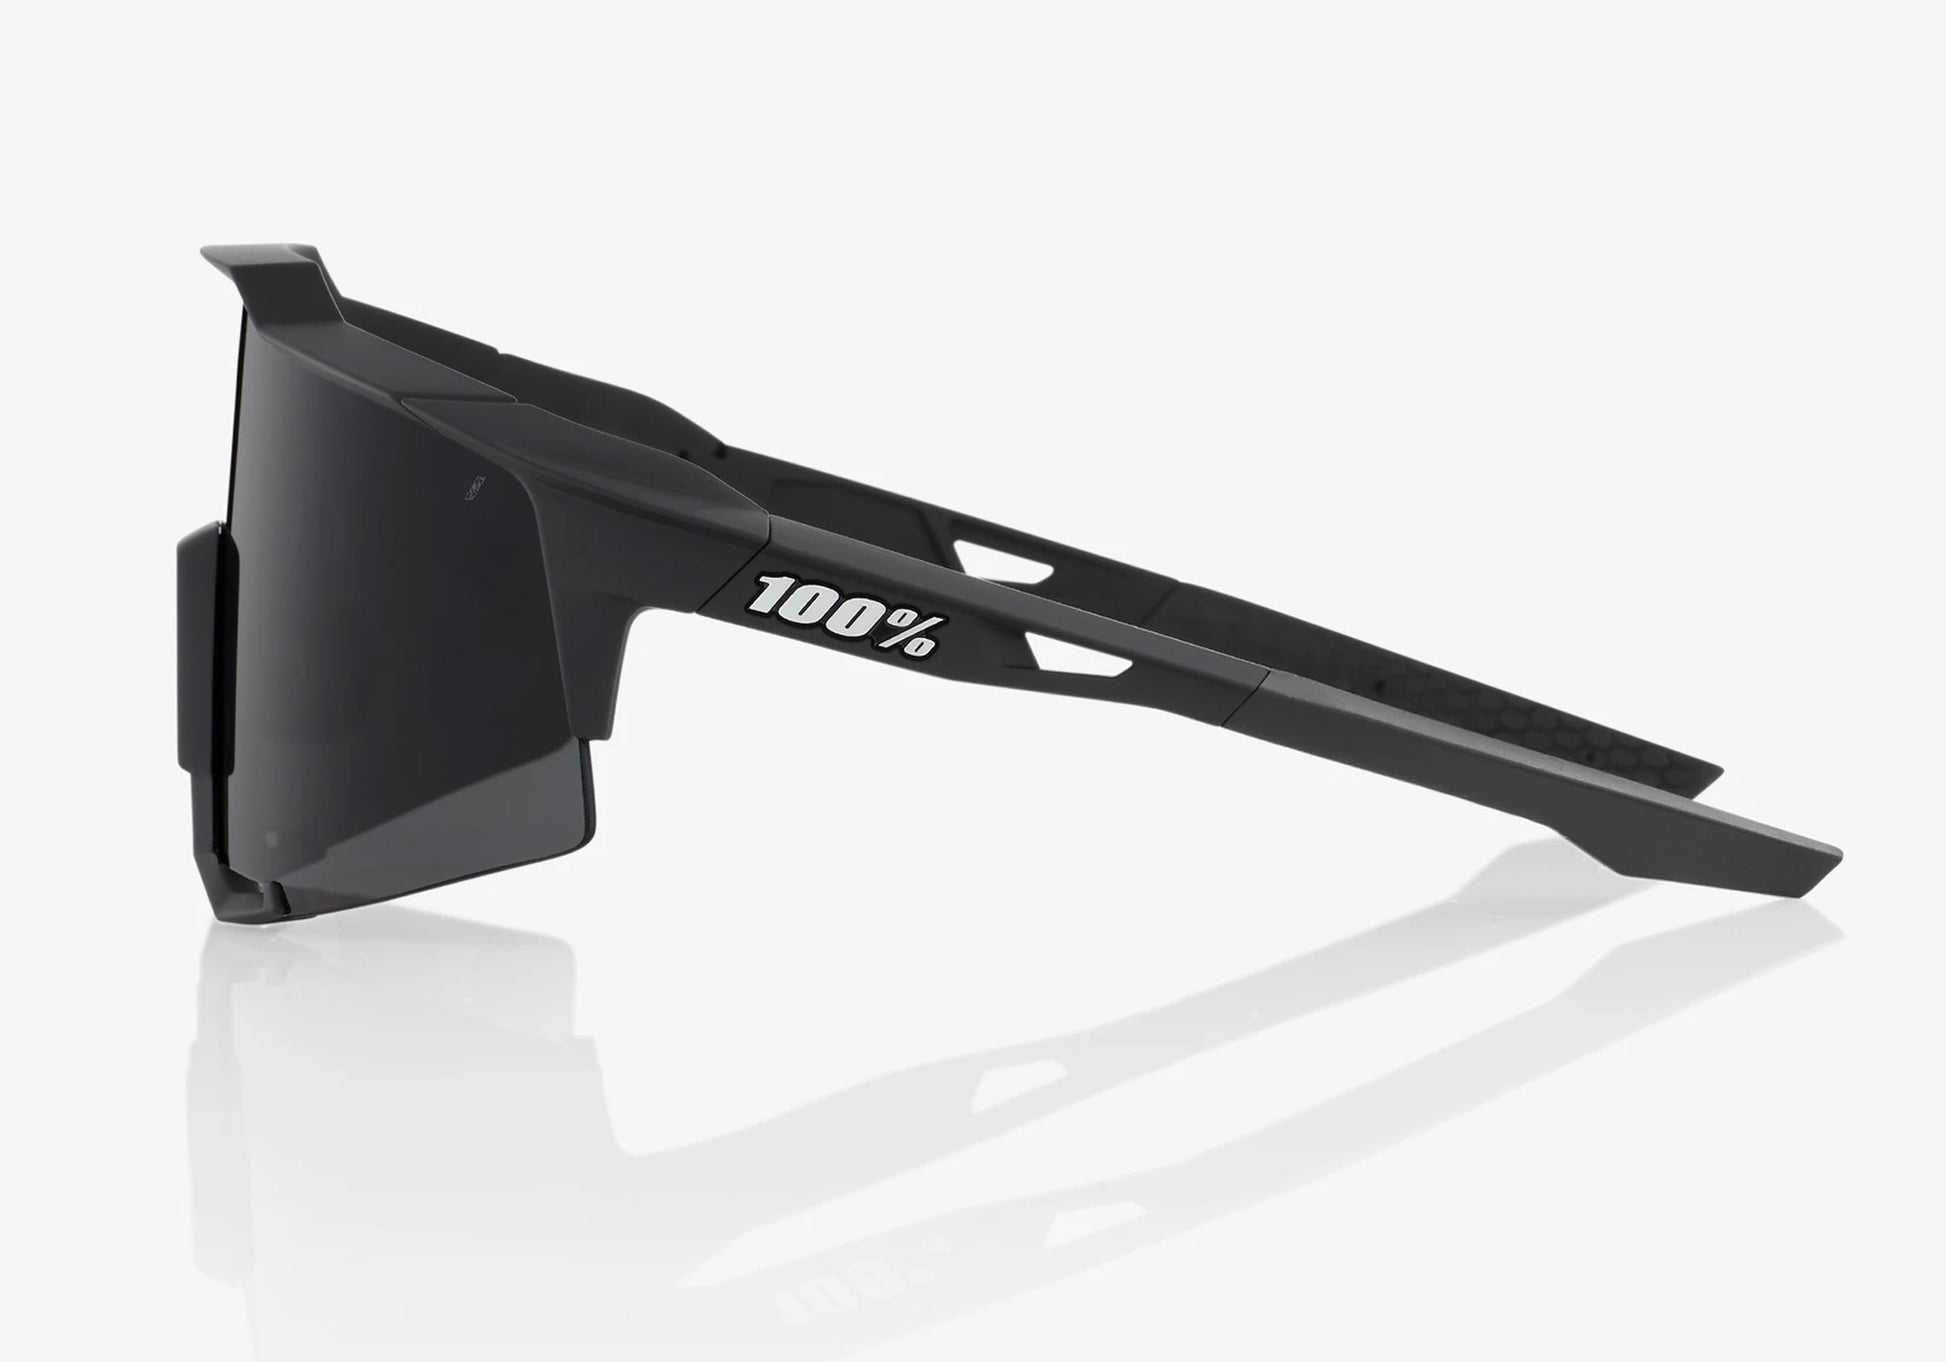 100% Speedcraft Soft Tact Black with Smoke Lens Cycling Sunglasses